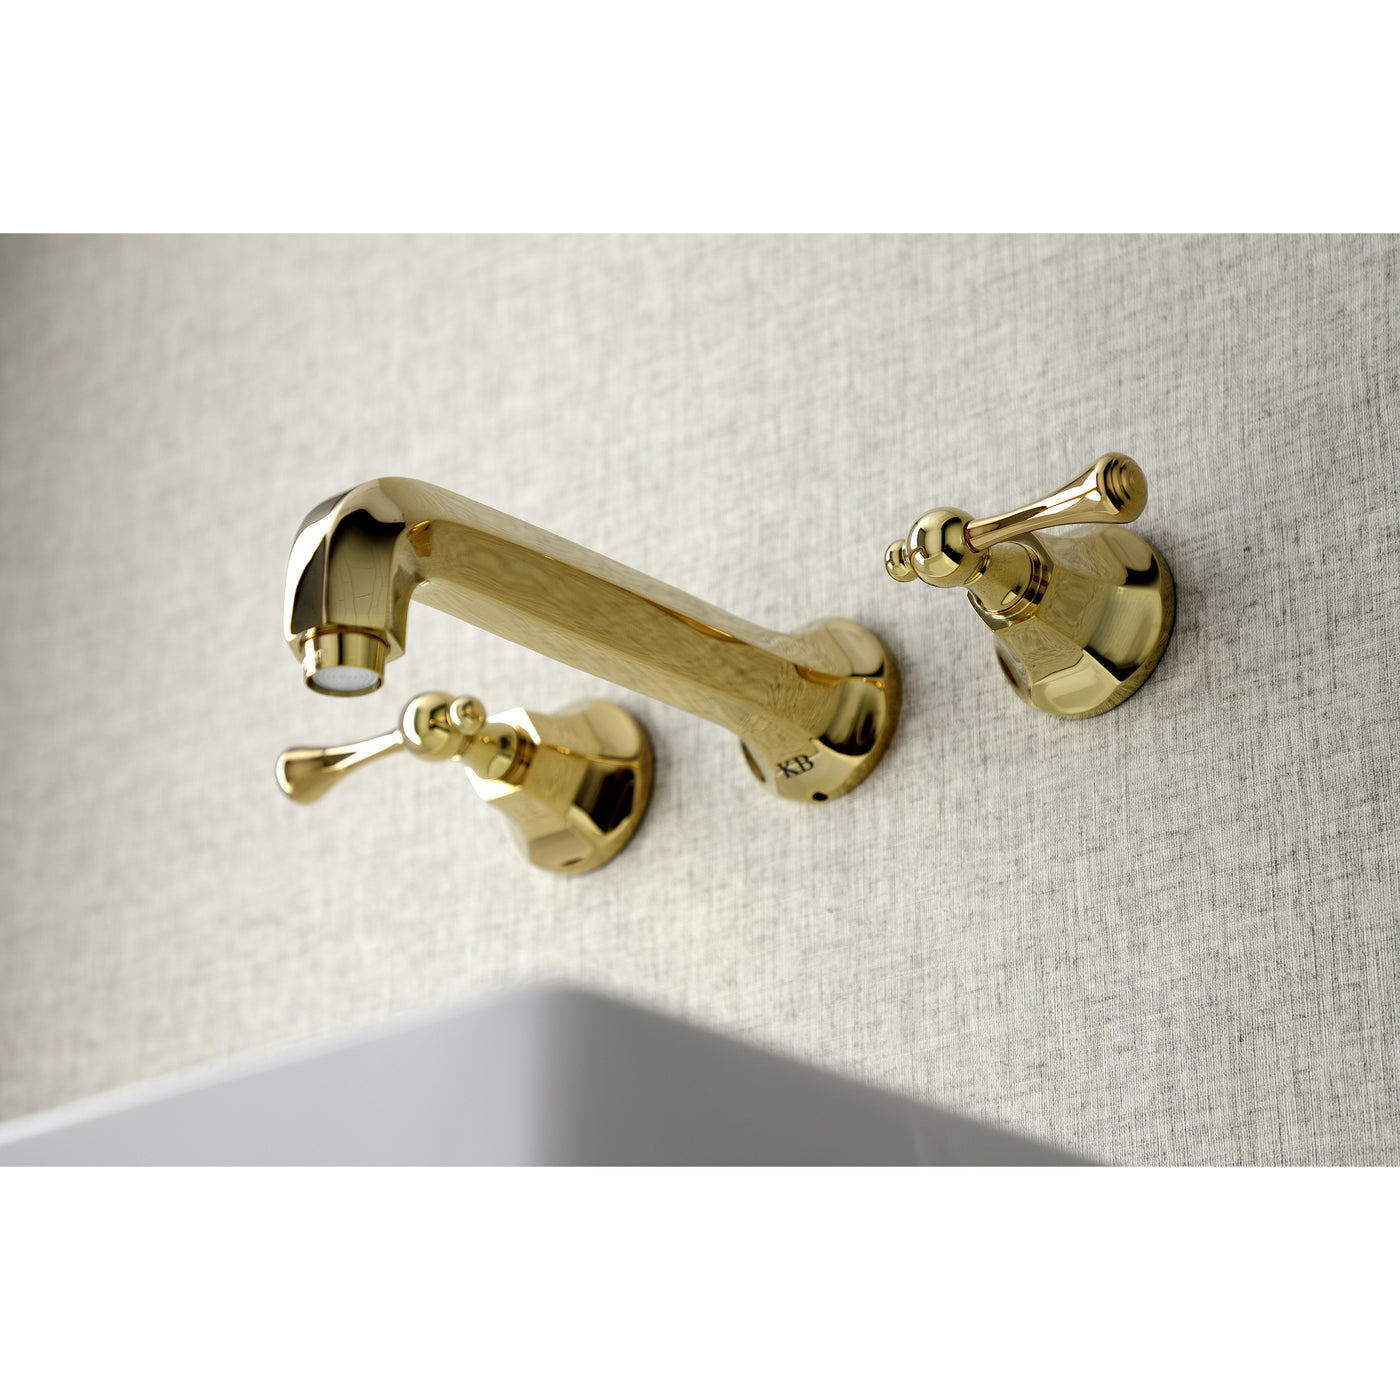 Elements of Design ES4122BL Wall Mount Bathroom Faucet, Polished Brass